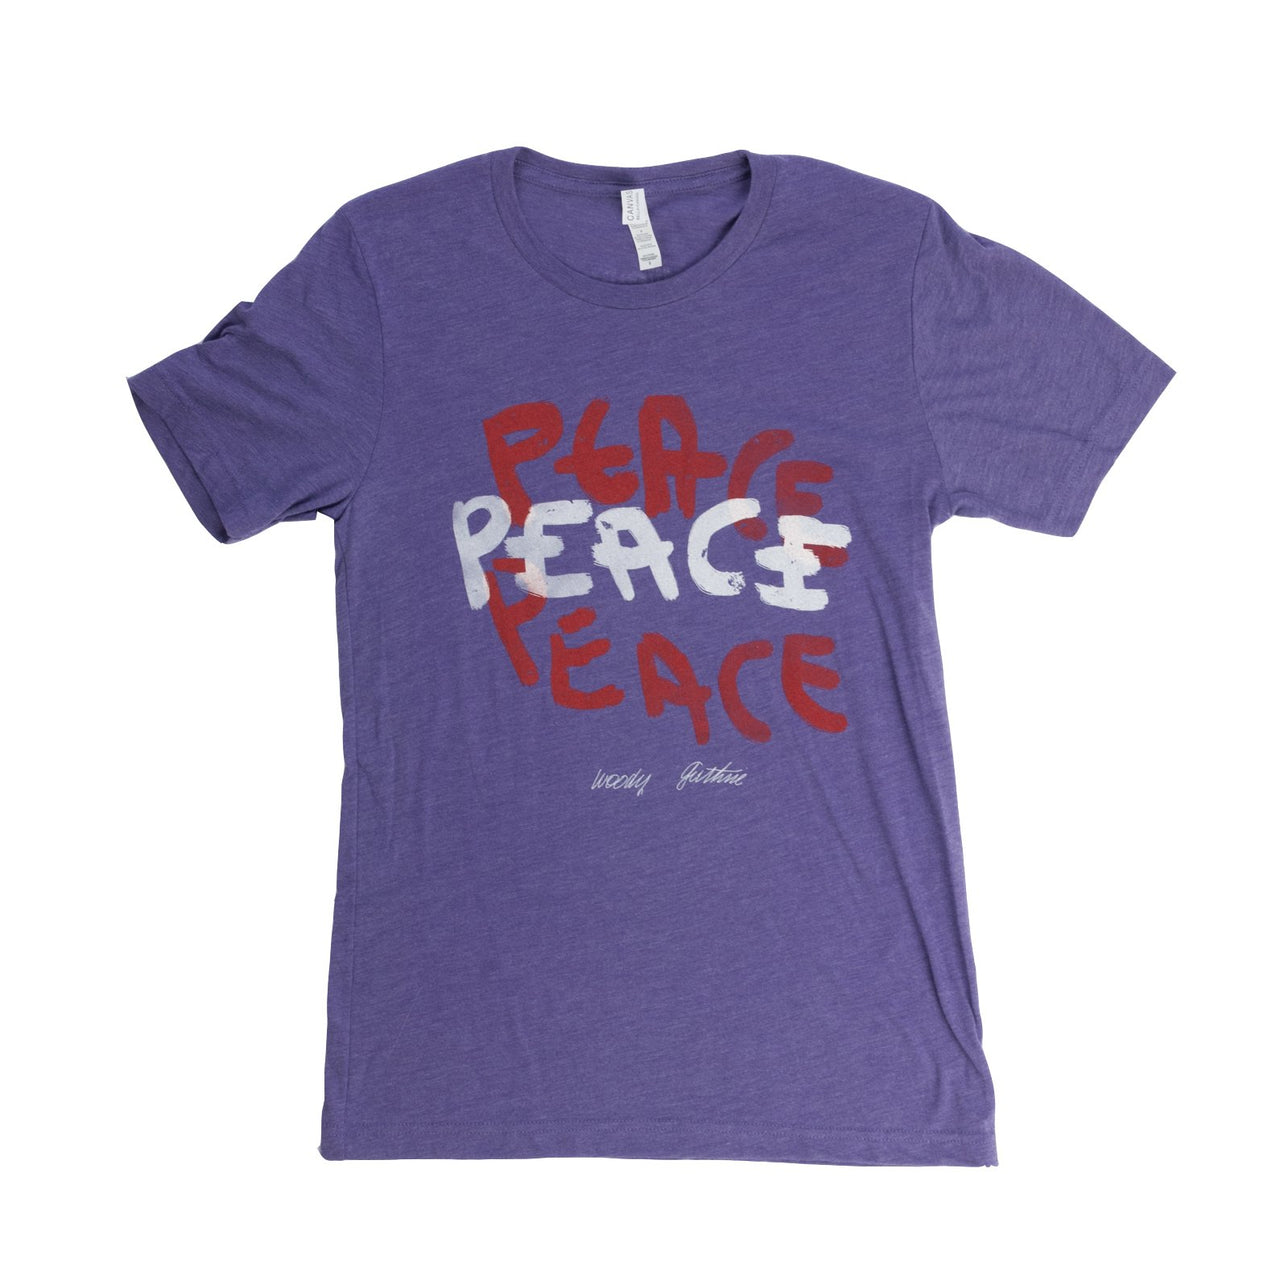 Woody Guthrie "Peace" Shirt